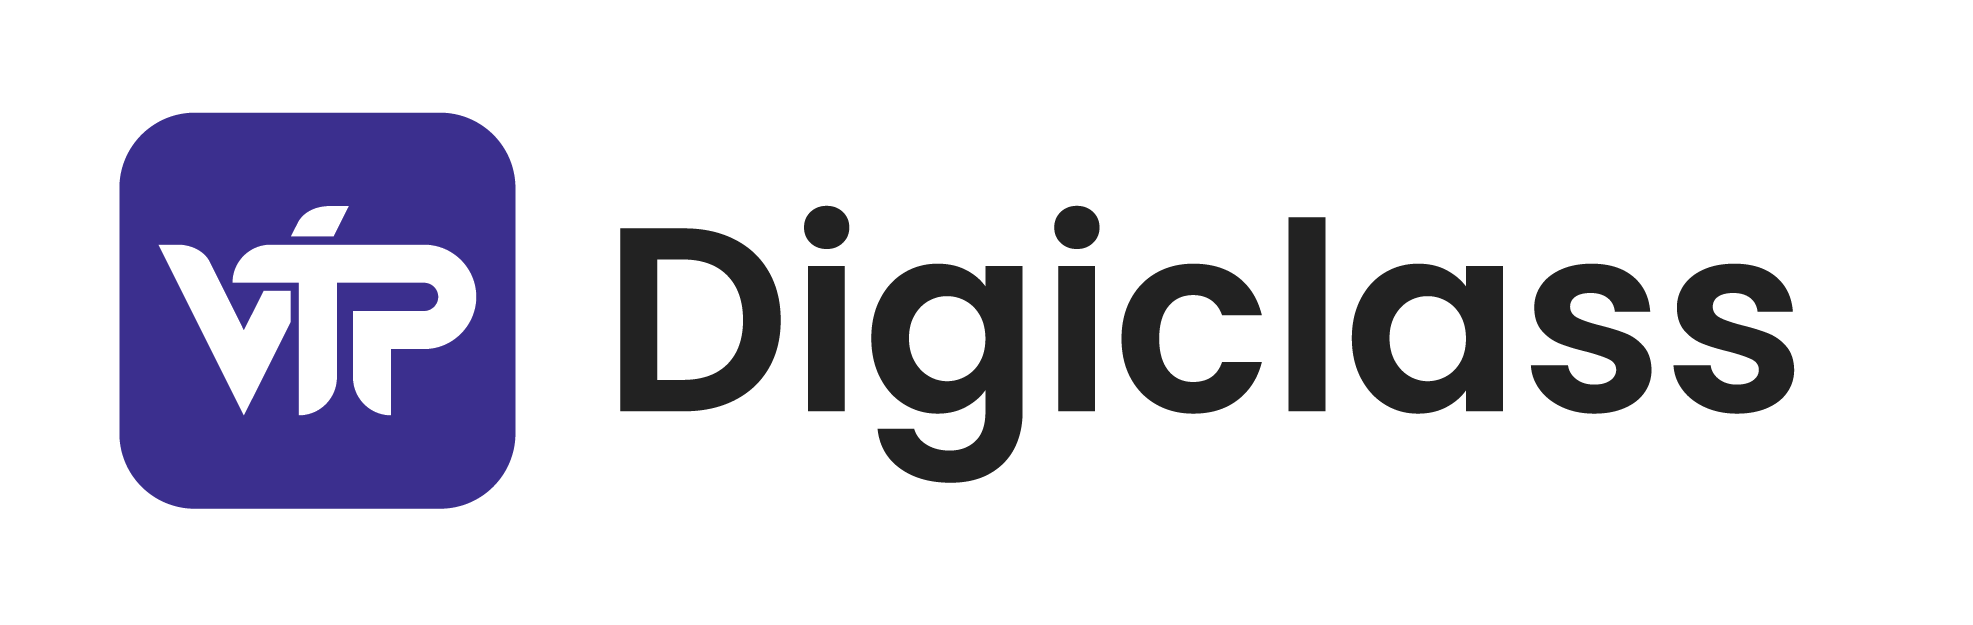 VTP Digiclass Logo